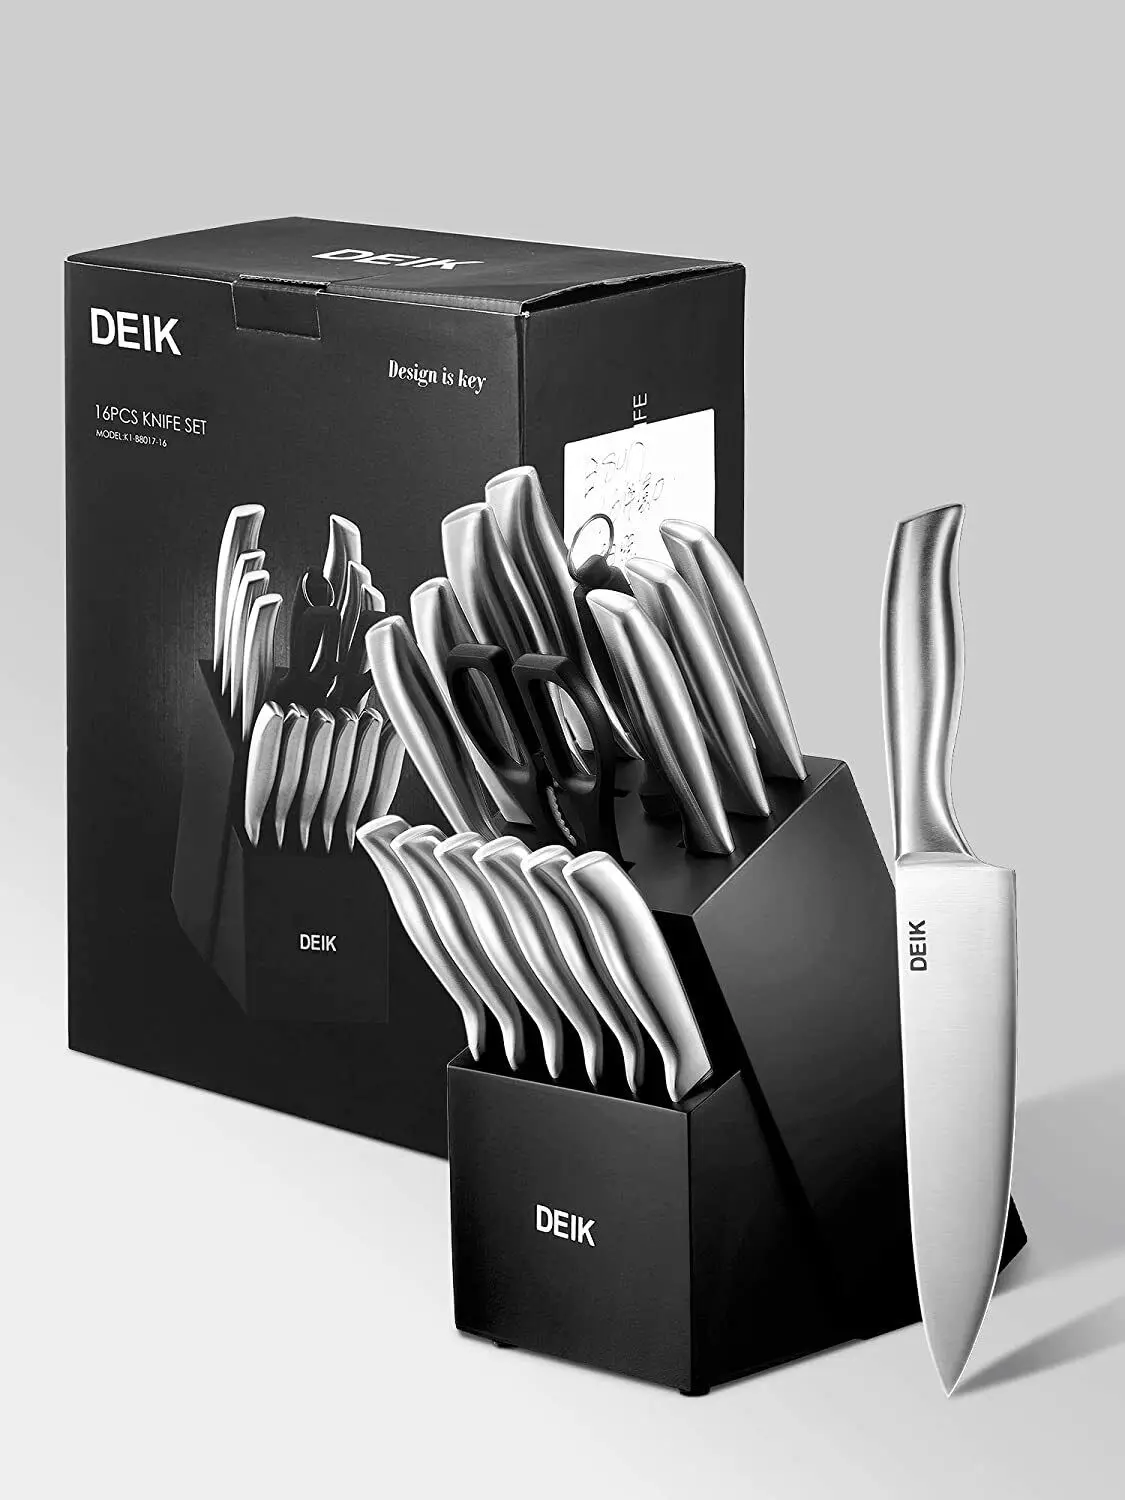 https://ae01.alicdn.com/kf/Sa382b428fc004e74842ad4e81610887bU/DEIK-Knife-Set-Stainless-Steel-16-Pcs-Kitchen-Knife-Set-w-Wood-Block-Boning-Knife.jpg